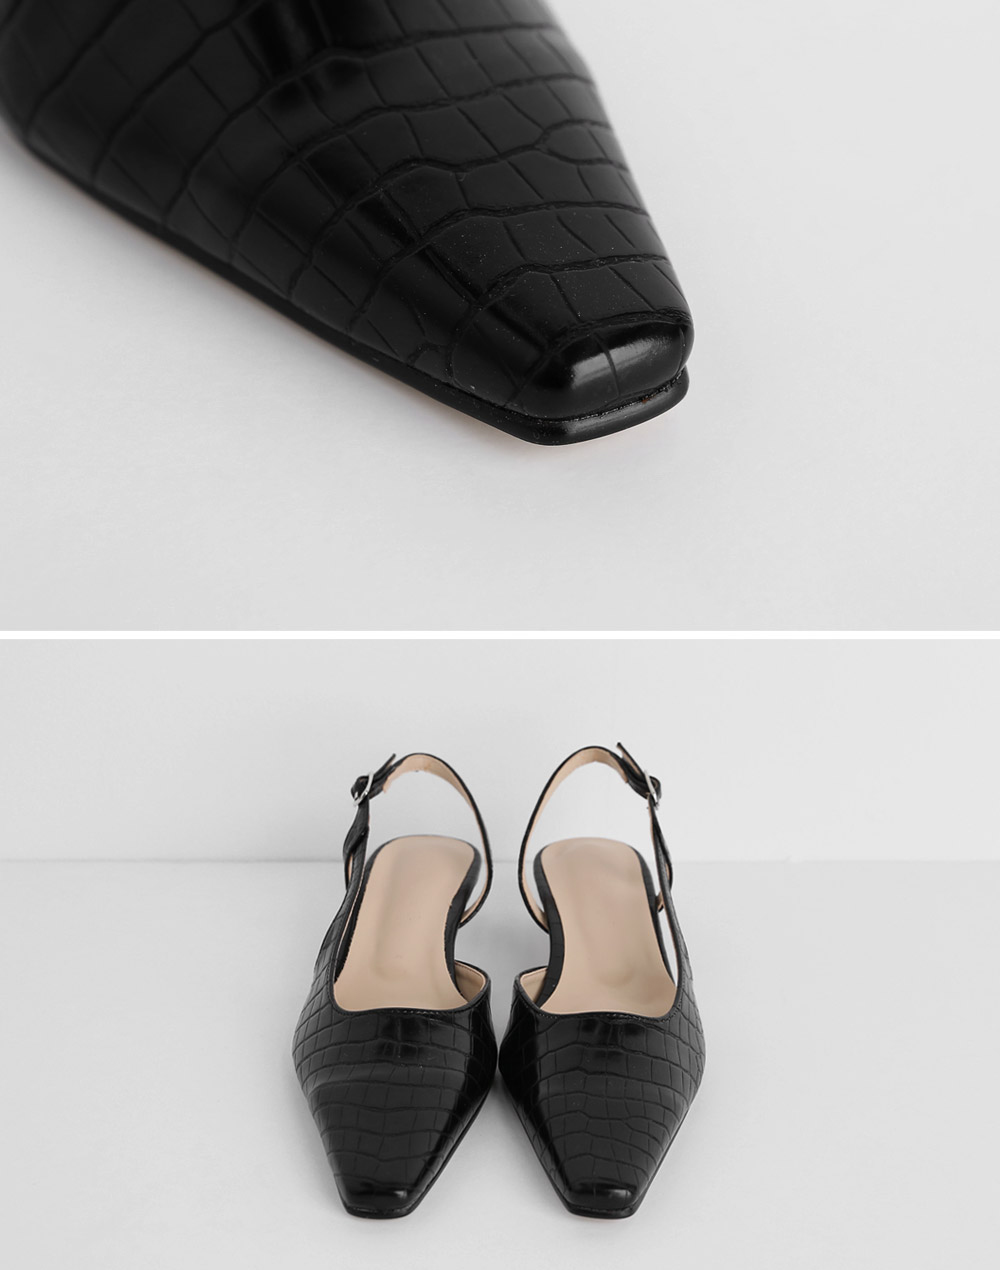 pattern shoes・s276215（シューズ/ヒール）| chipichan.1215 | 東京ガールズマーケット